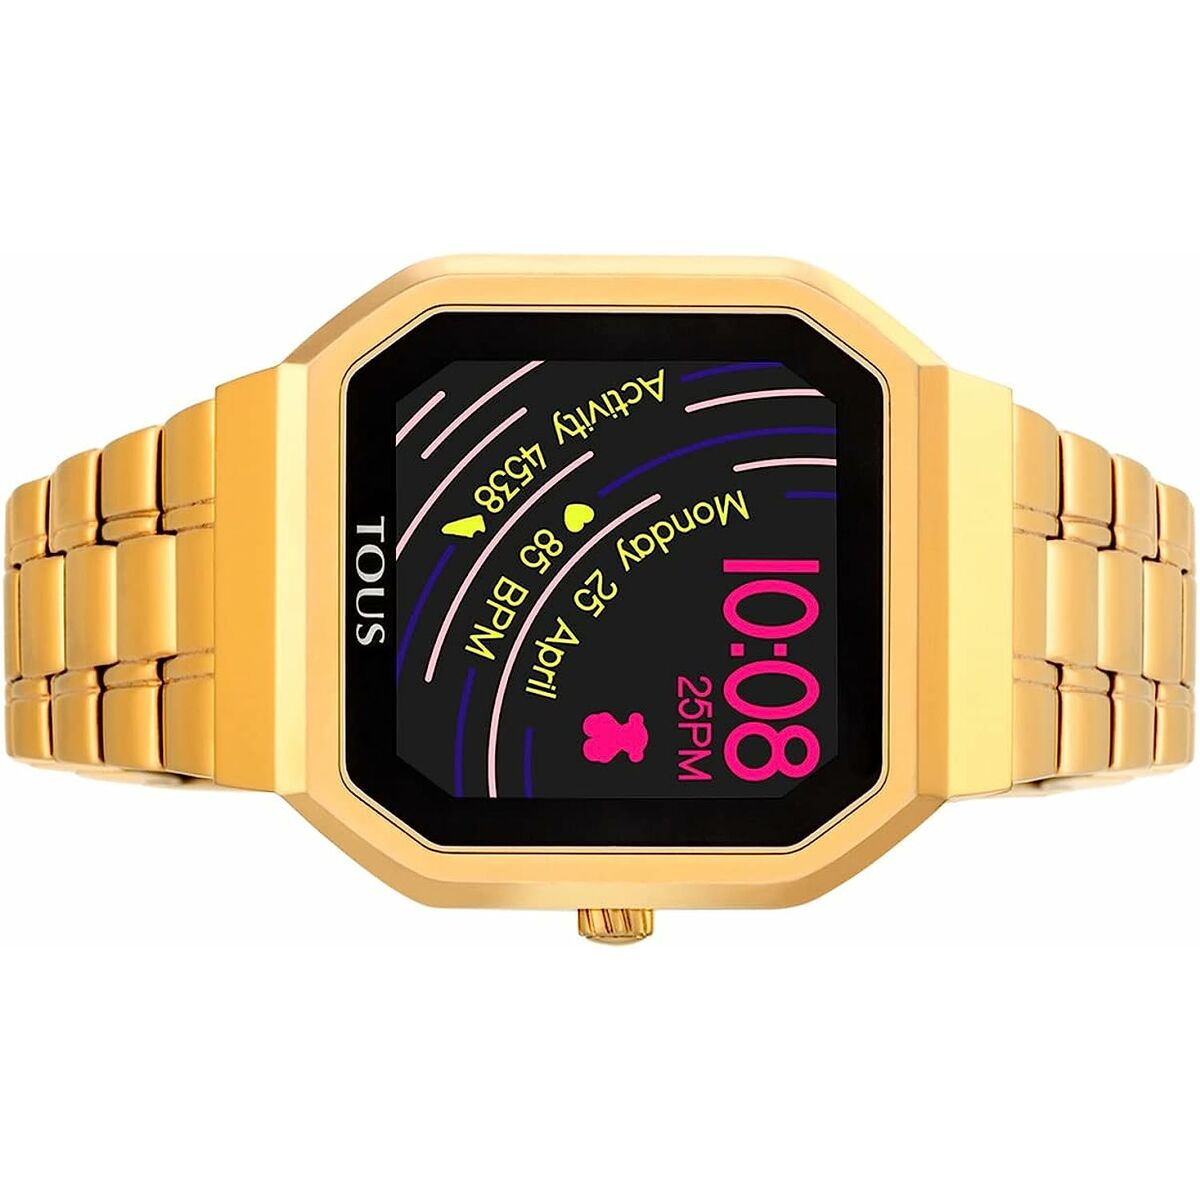 Kaufe Smartwatch Tous 100350700 bei AWK Flagship um € 261.00